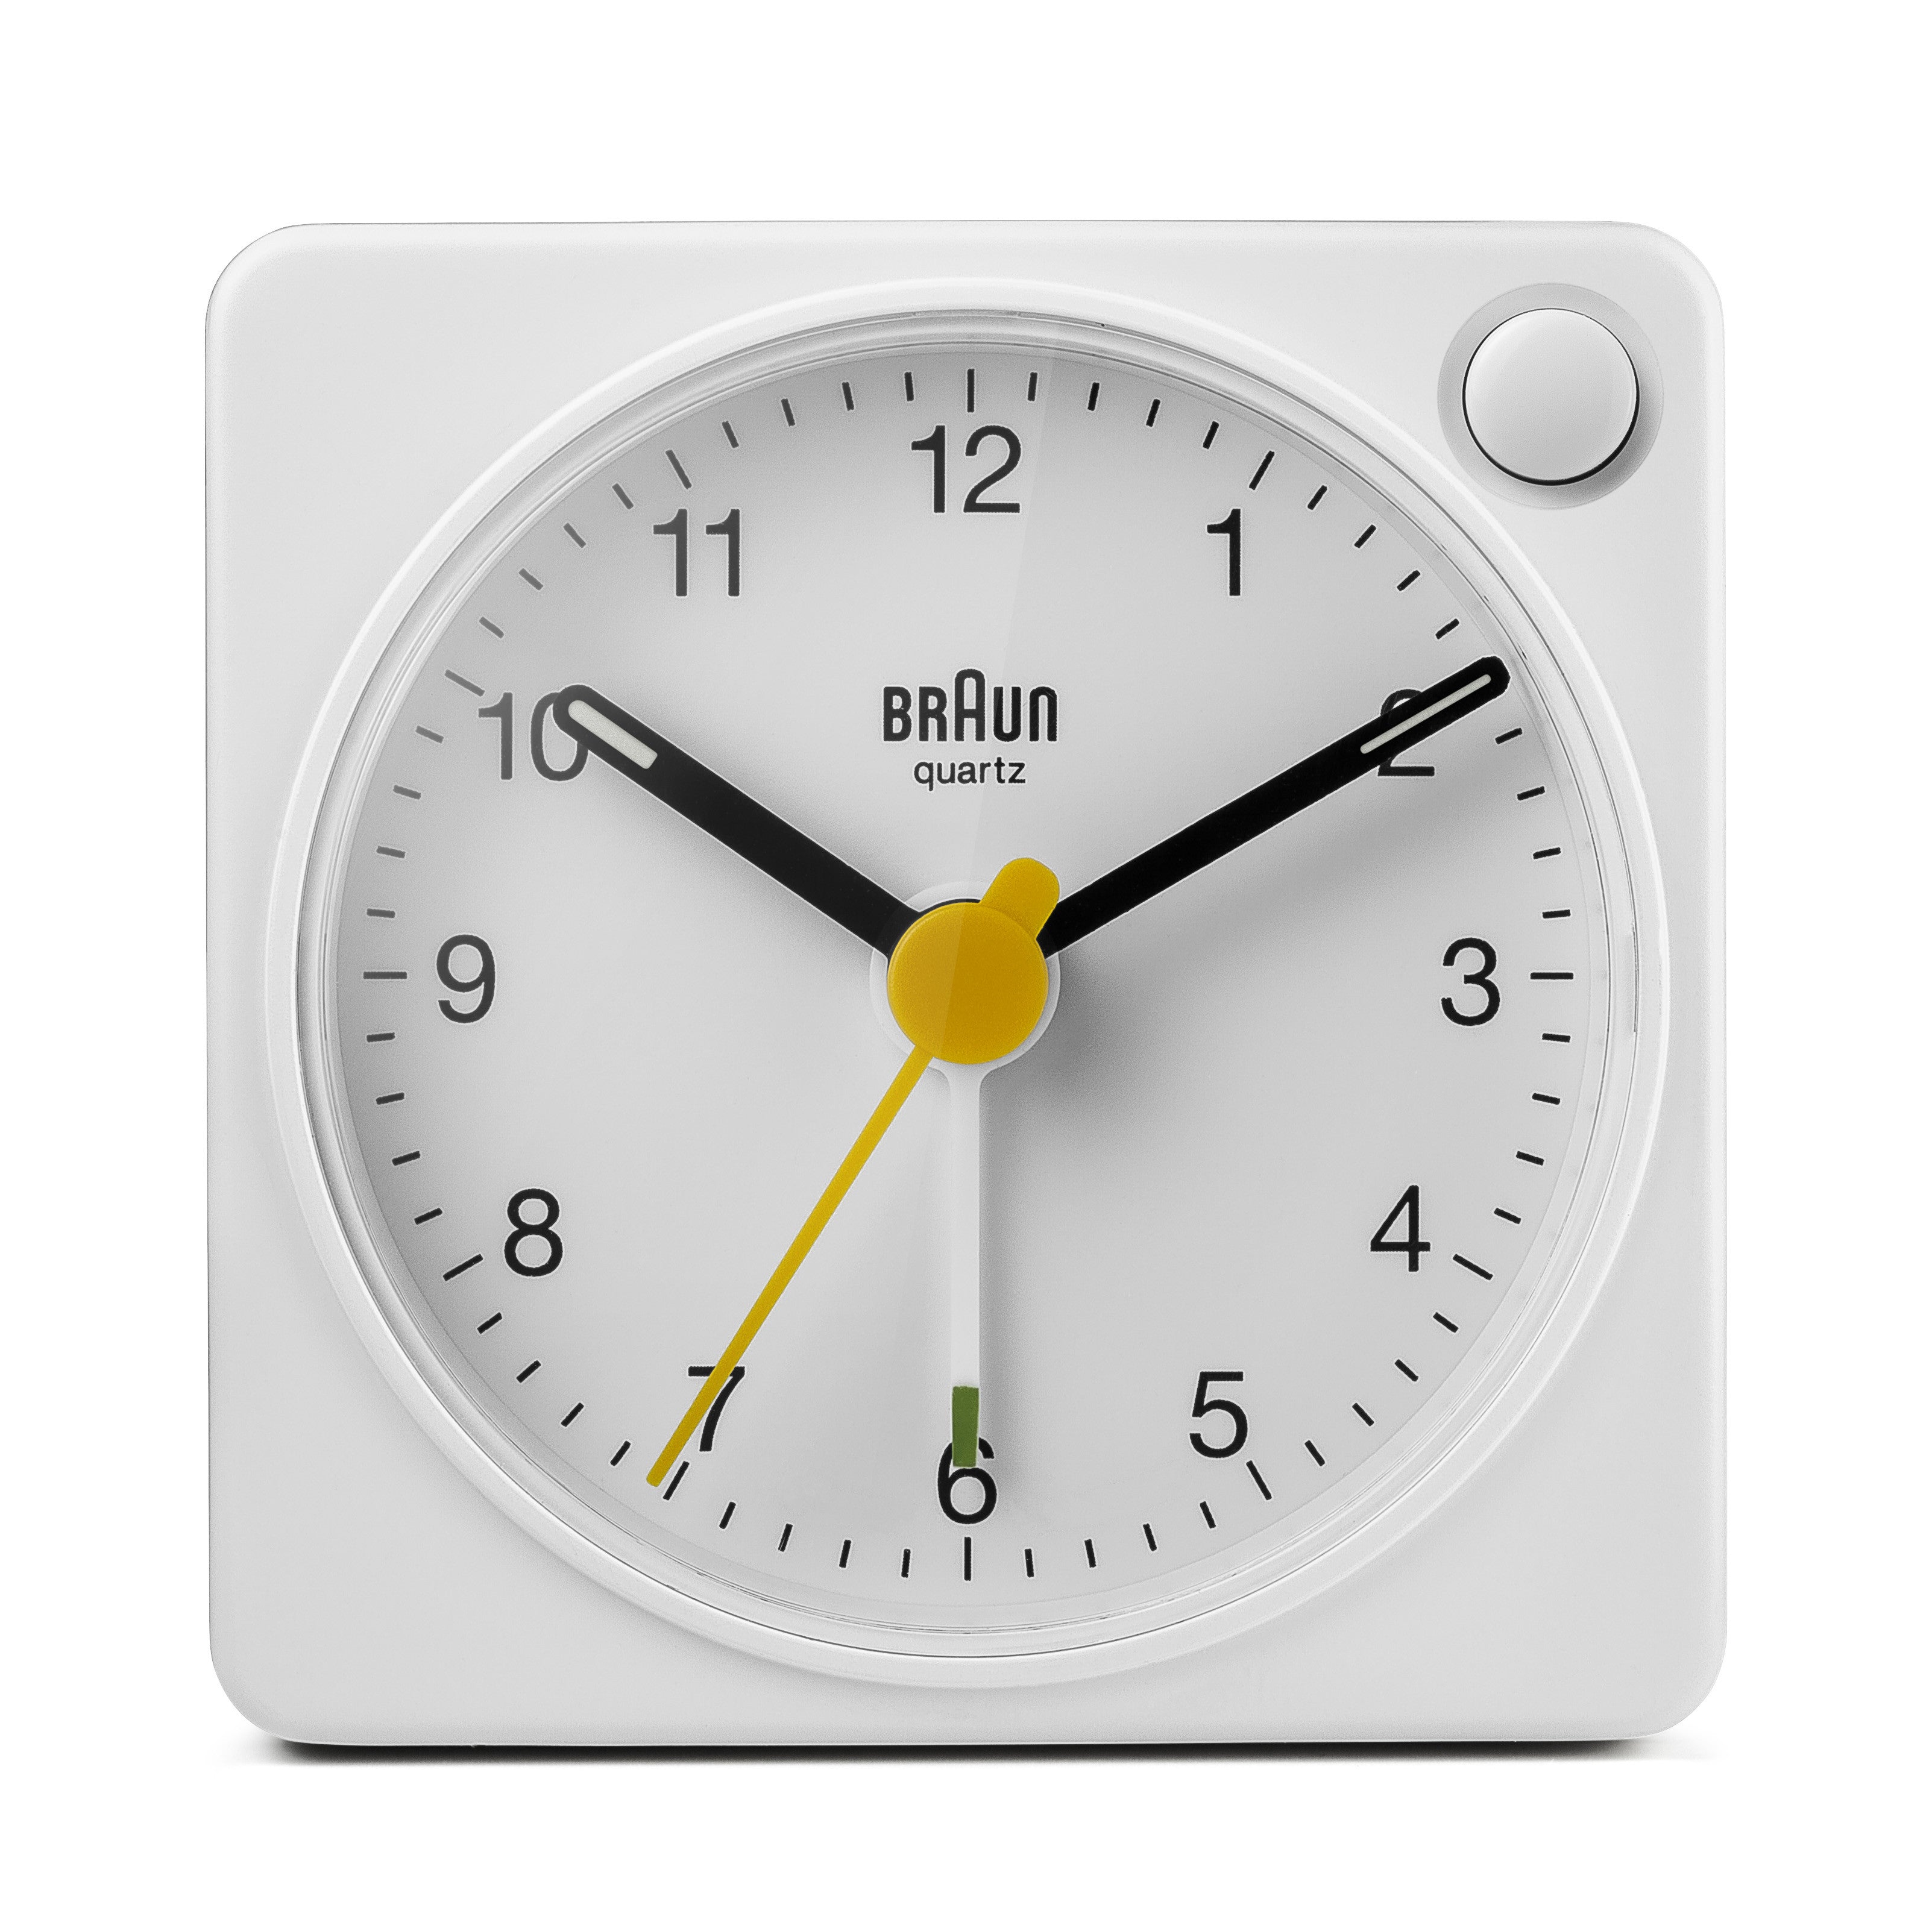 Braun Classic Travel Analogue Alarm Clock – White/White